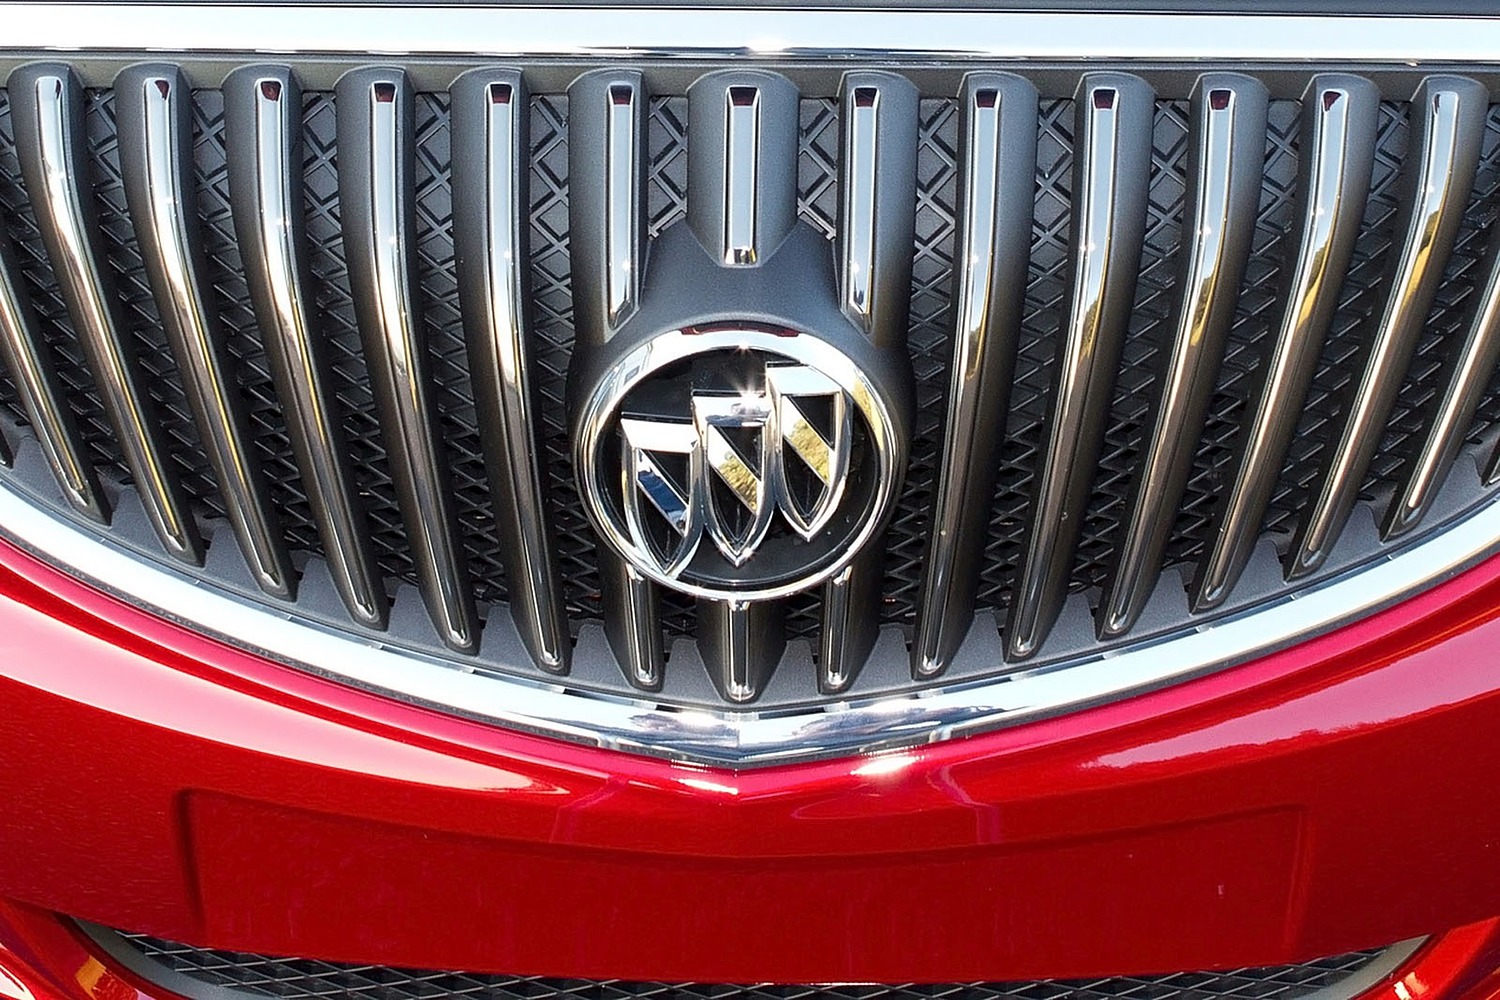 Buick Verano Sedan Front Badge (2013 model year shown)